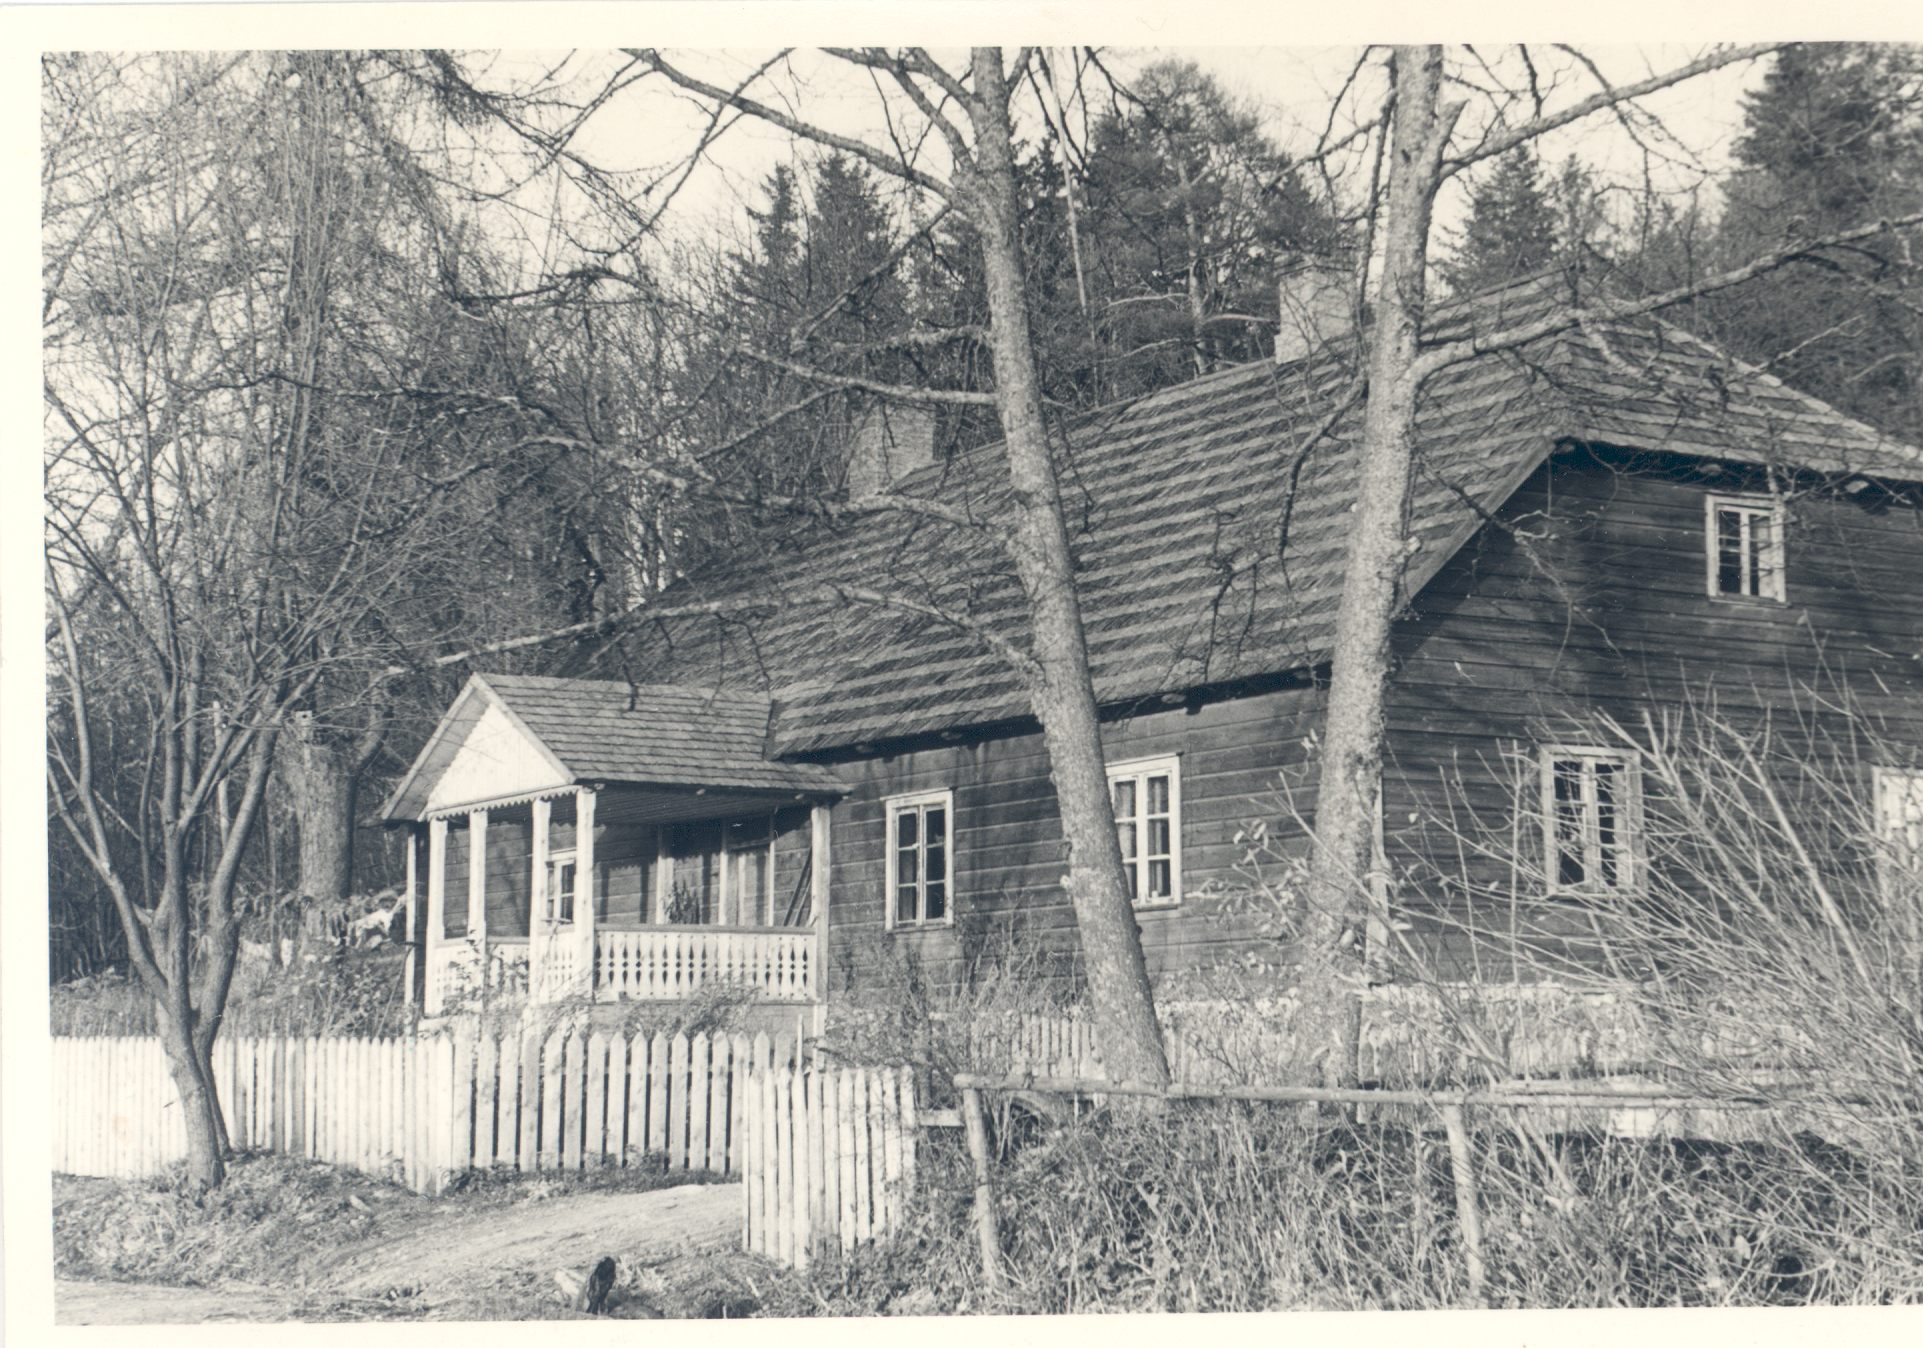 End. Polli rural municipality 1957